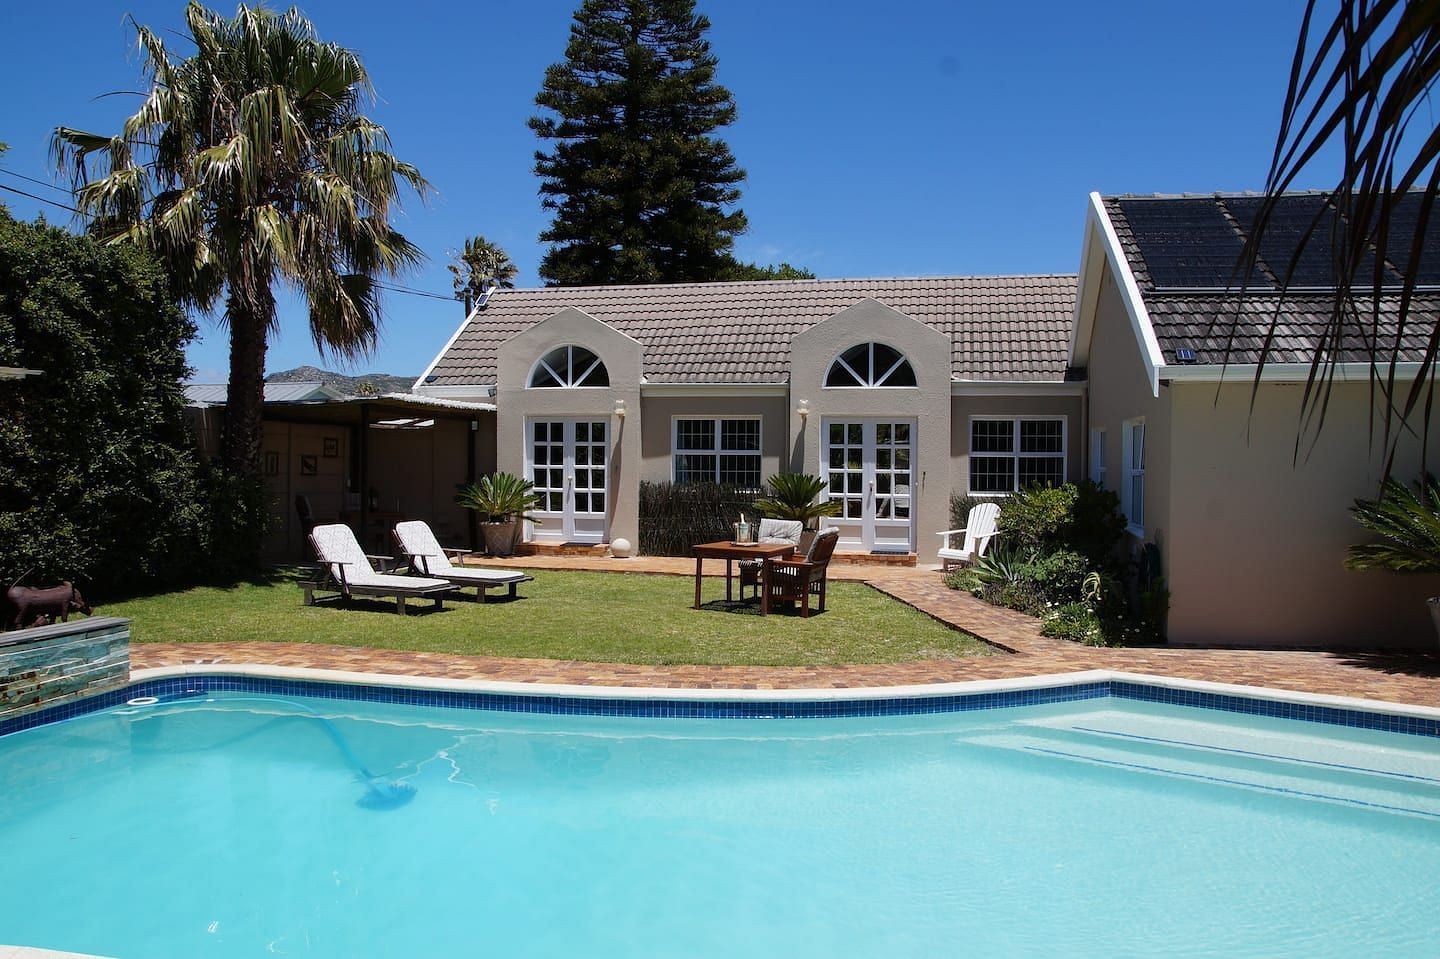 JWguest Residential Home at Cape Town, Western Cape | Wonderful Studio Apartment between 2 Oceans #2 | Jwbnb no brobnb 20